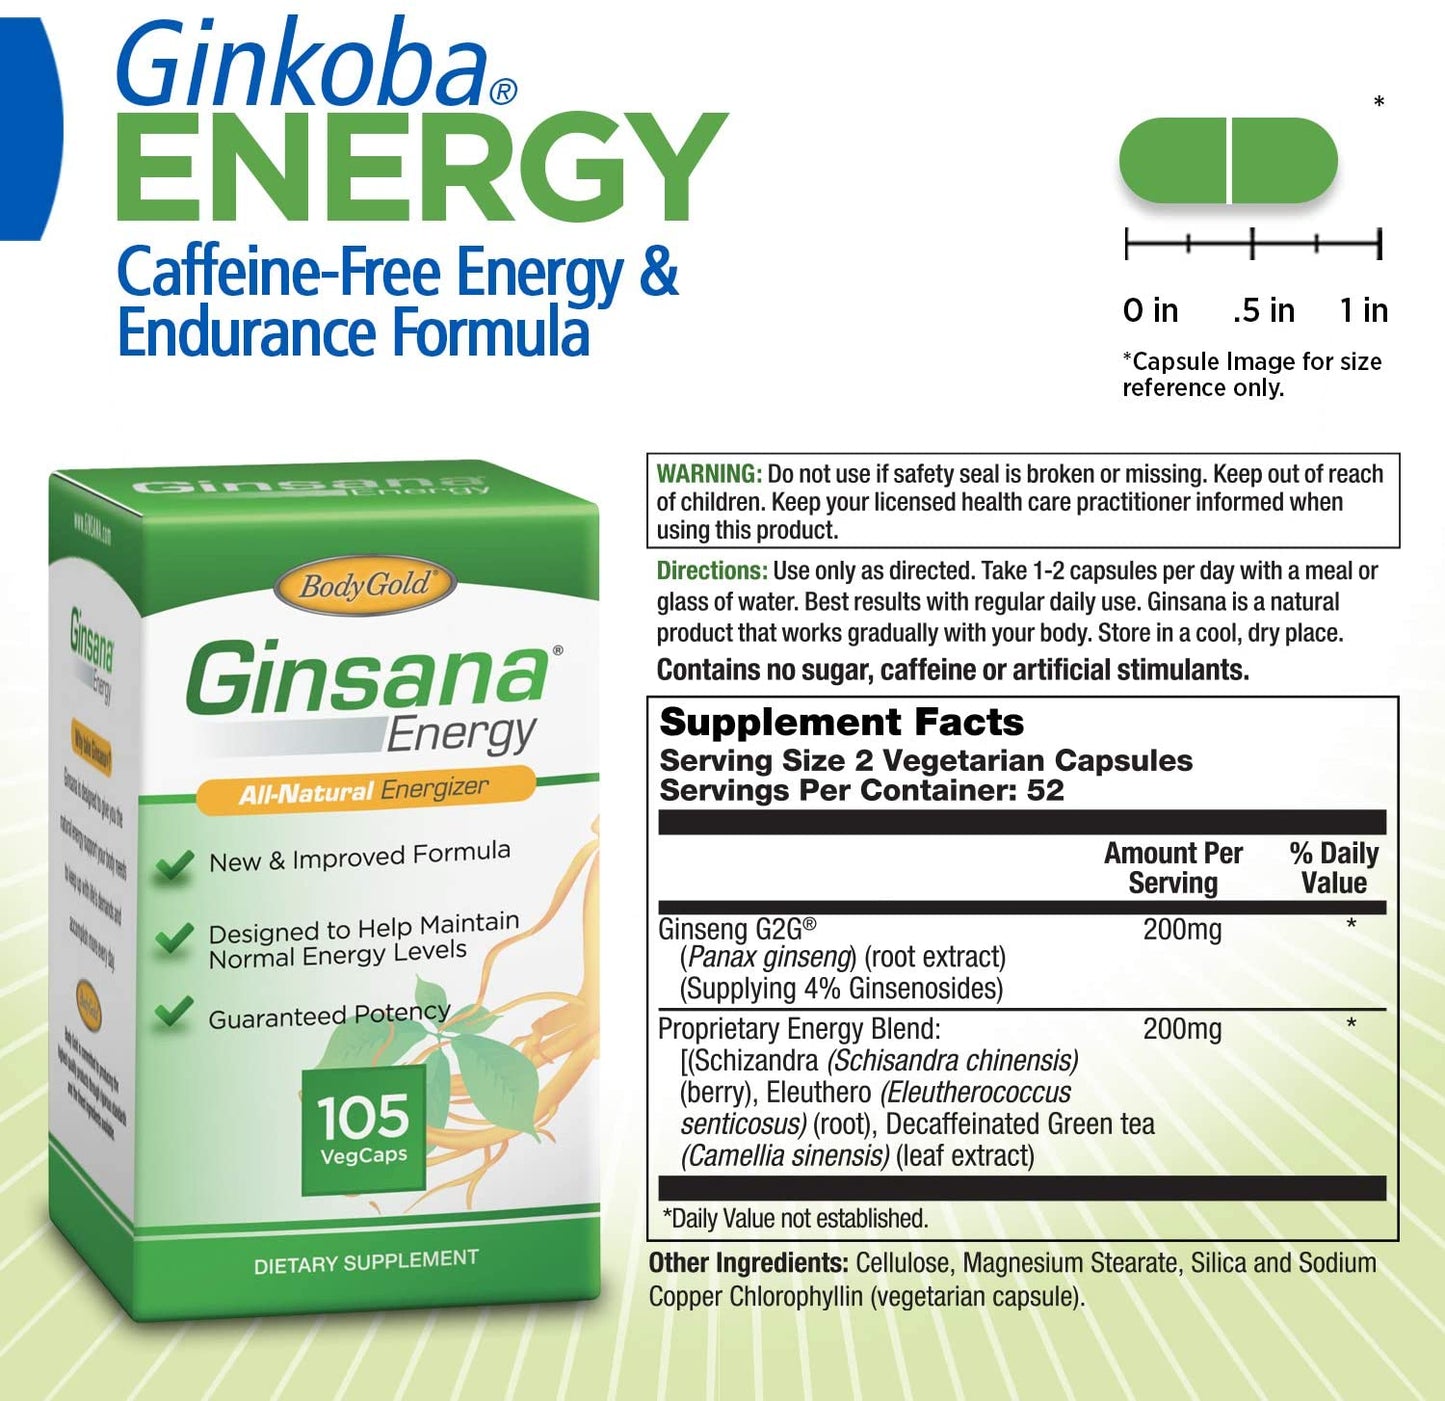 Ginsana Energy